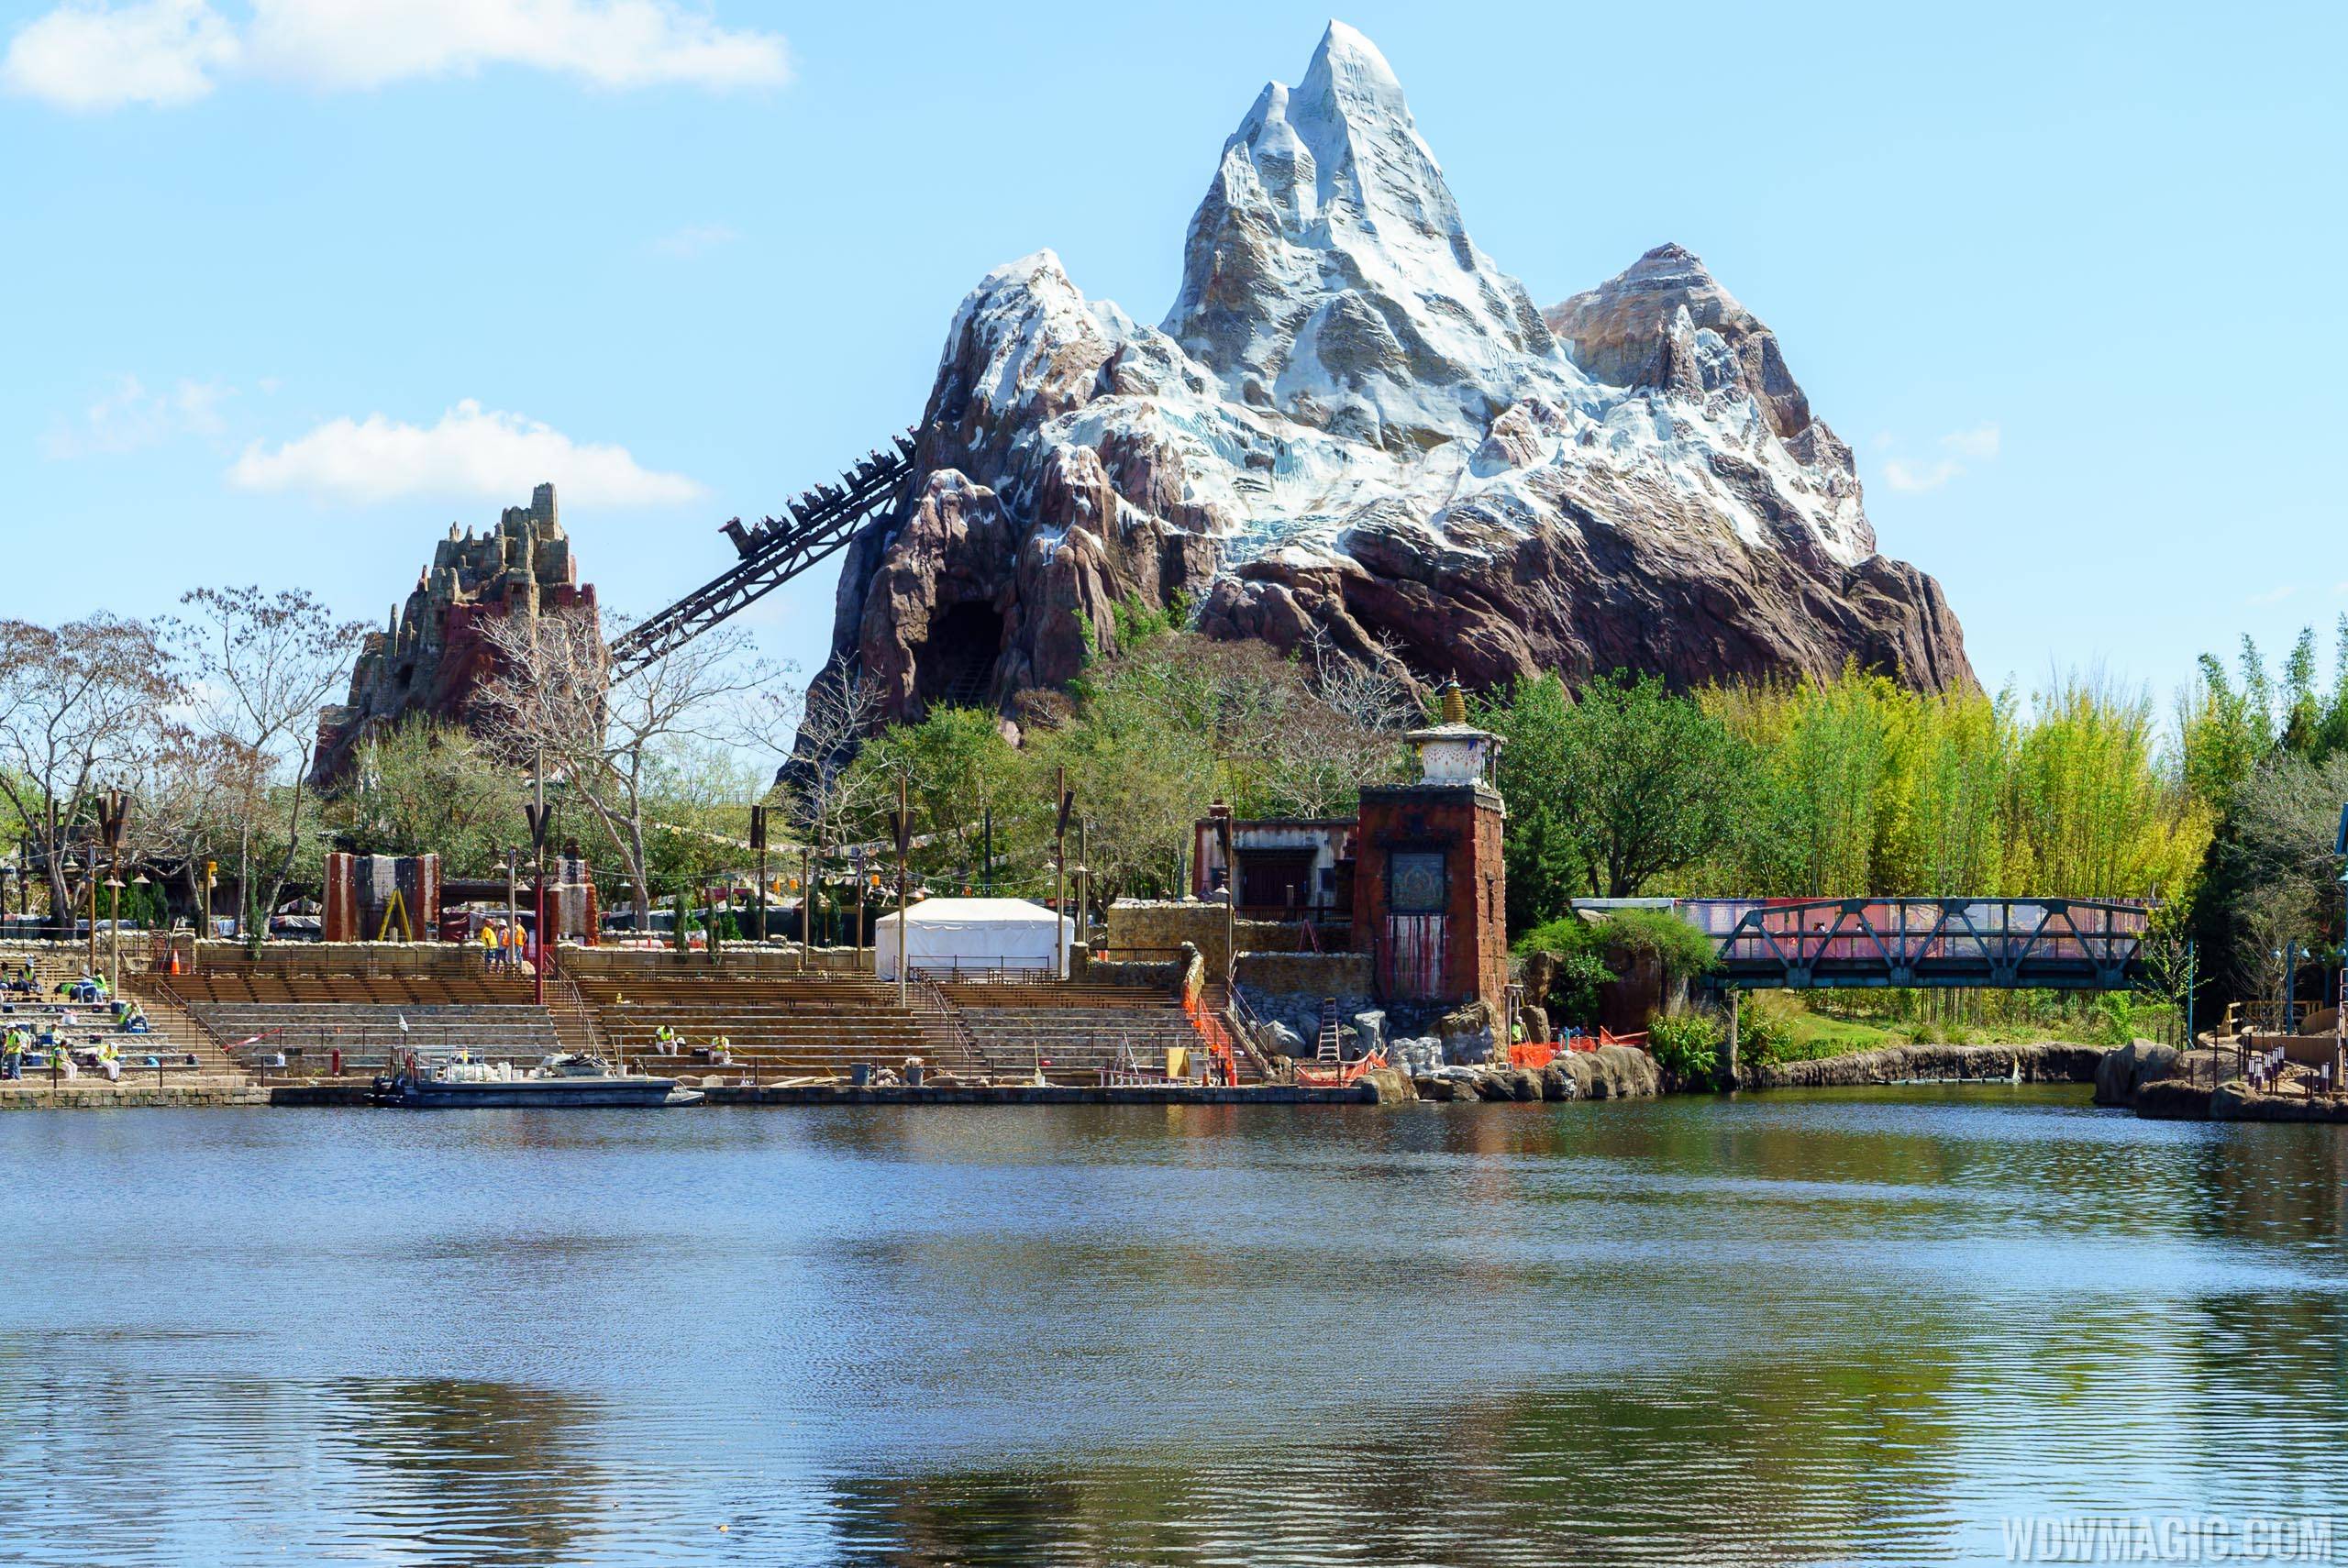 PHOTOS - Rivers of Light construction at Disney's Animal Kingdom